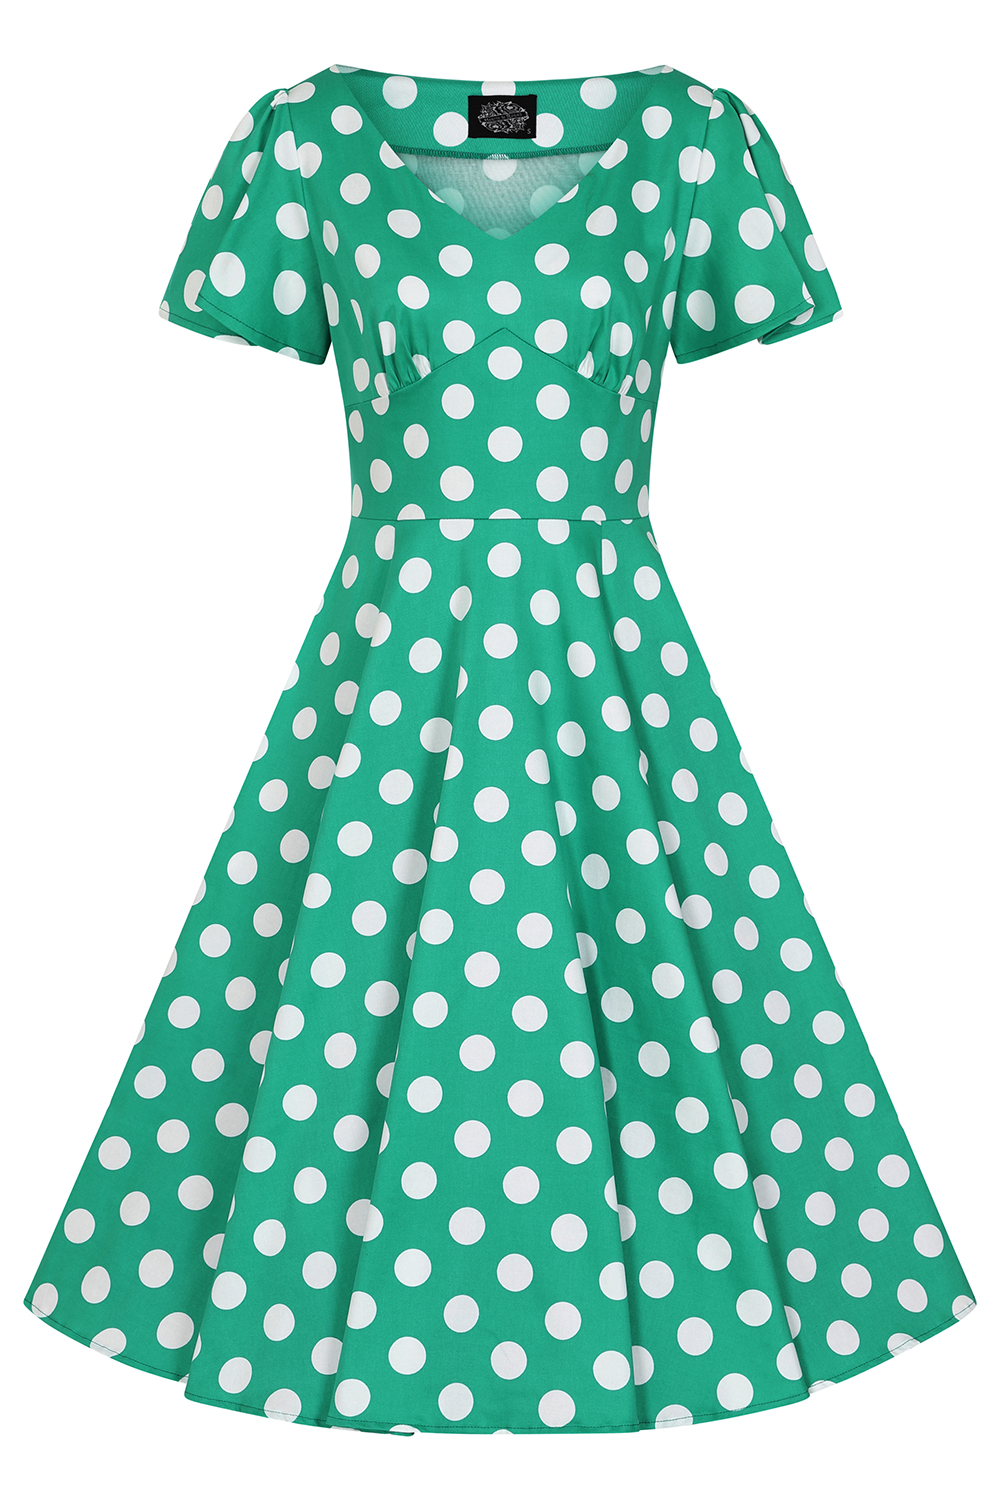 1950s Retro Swing Dress - Teal